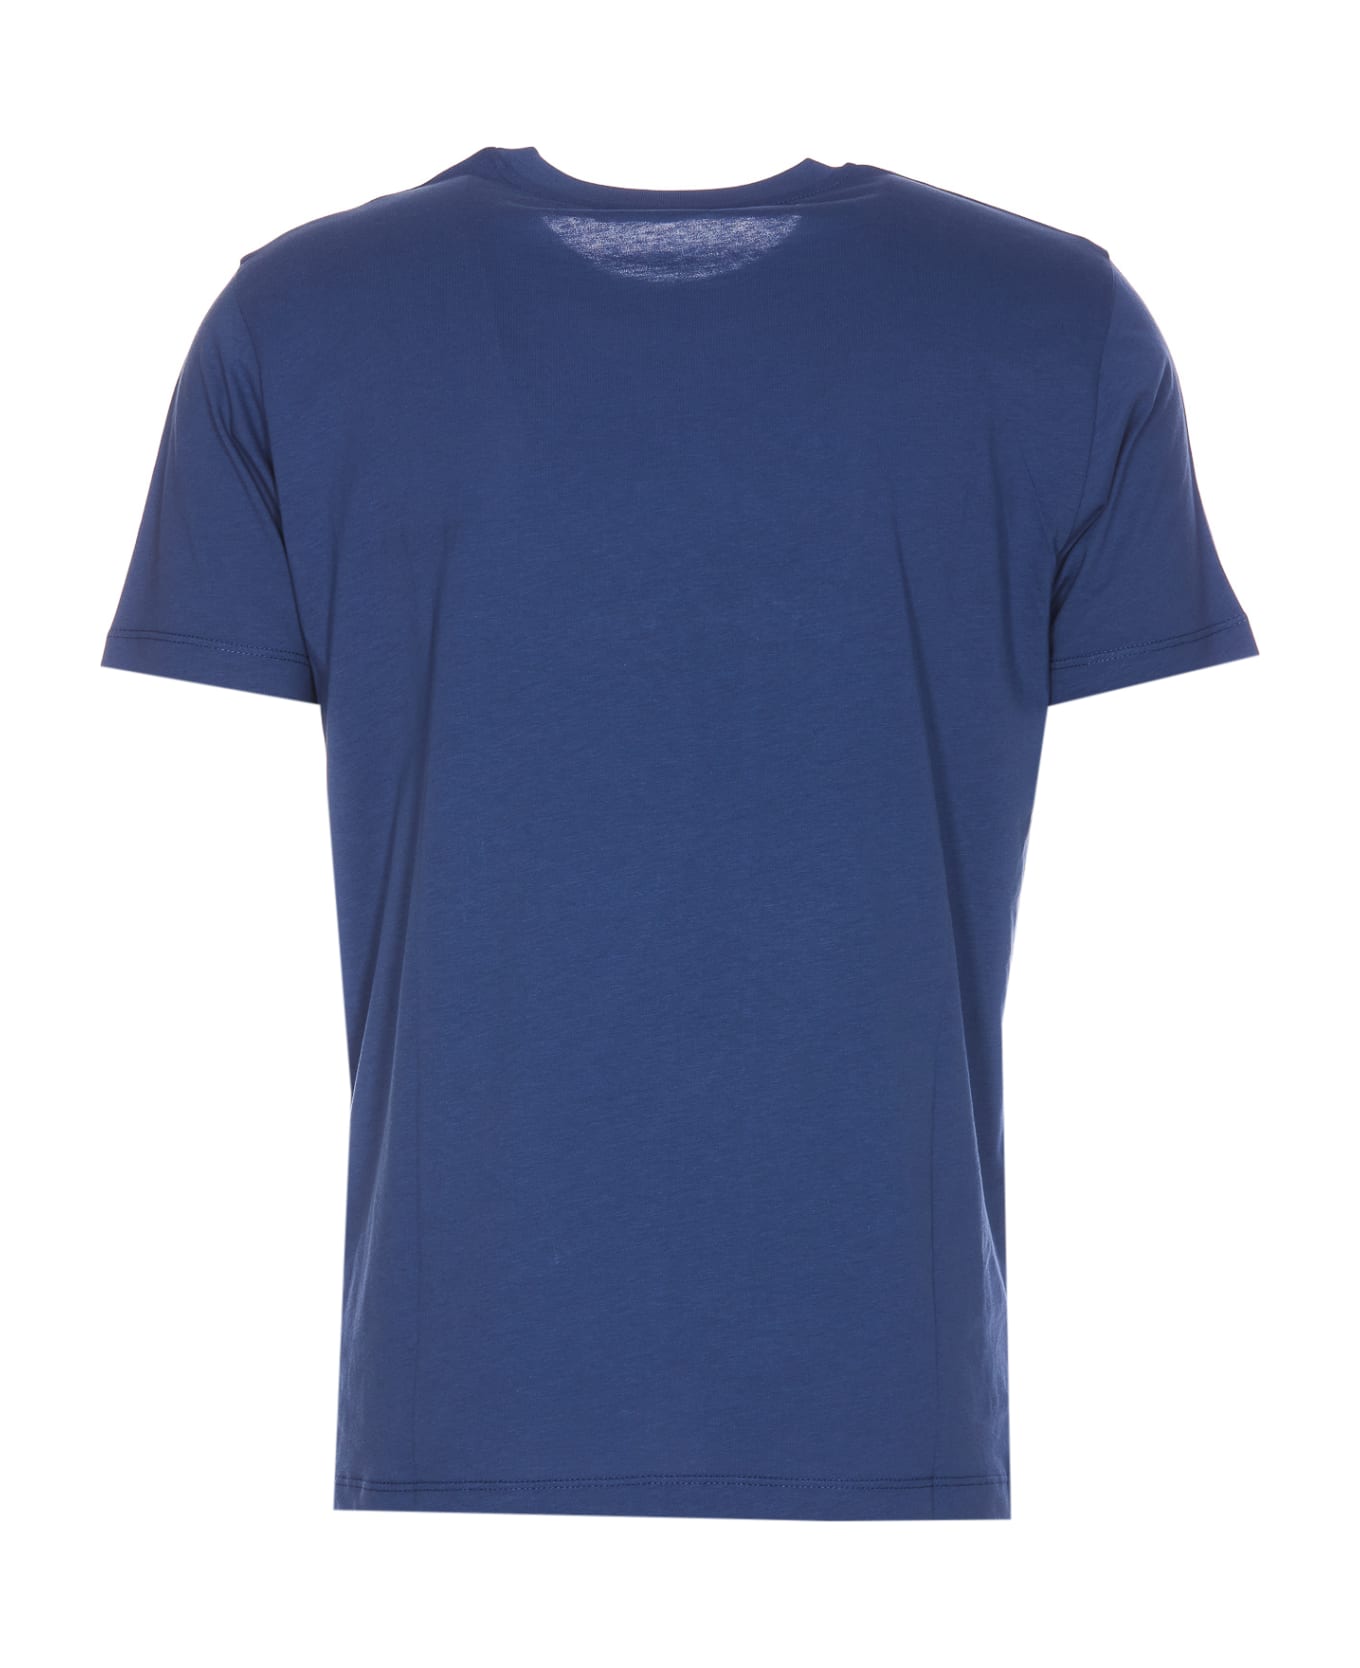 Vilebrequin T-shirt Tortue Flockee - Blue シャツ